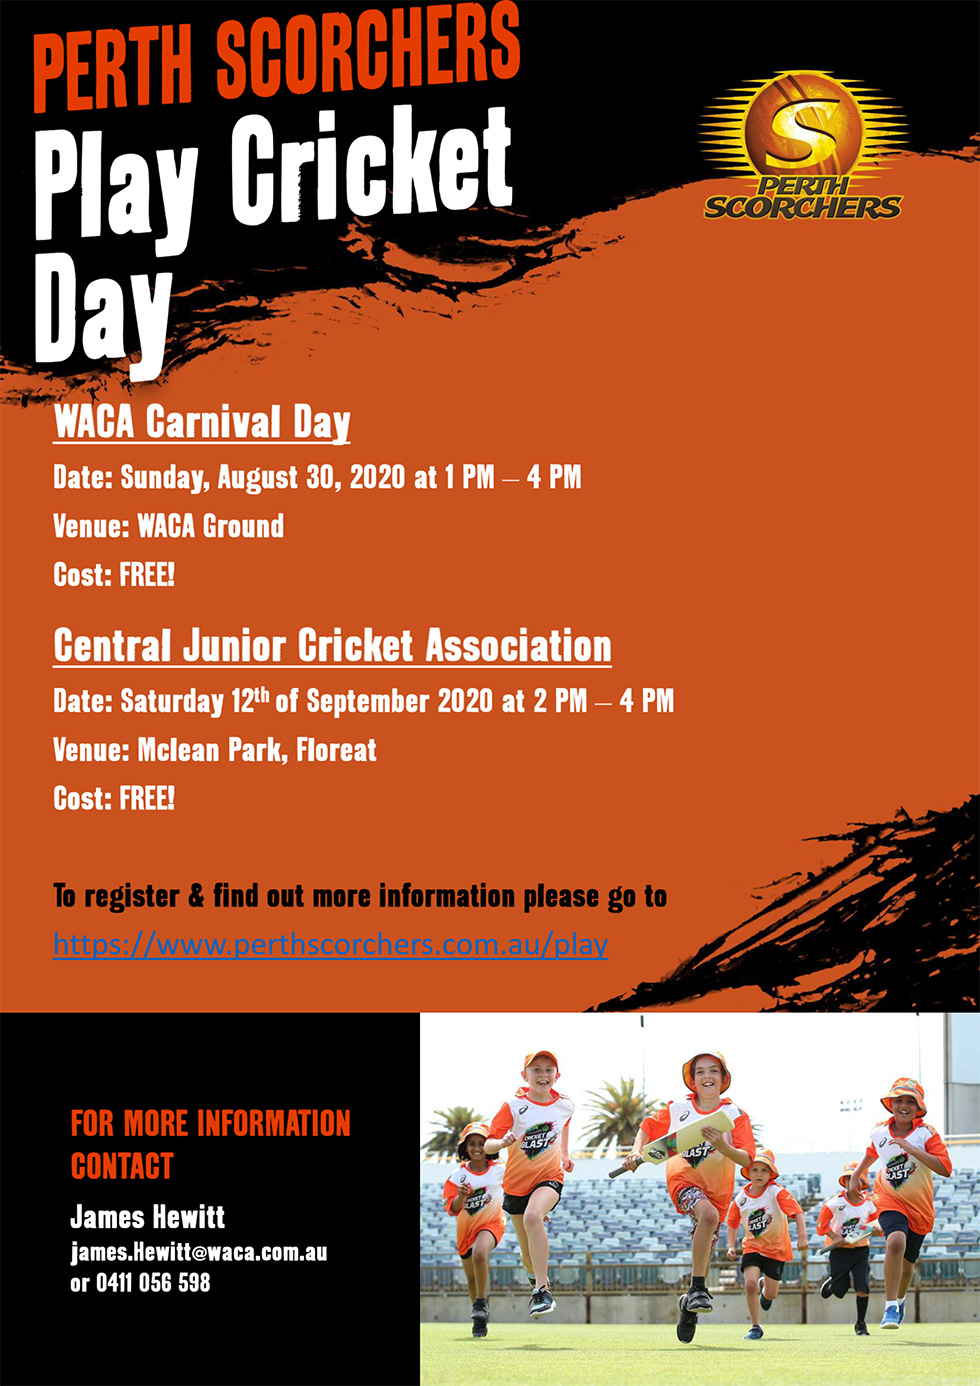 Play Cricket Day